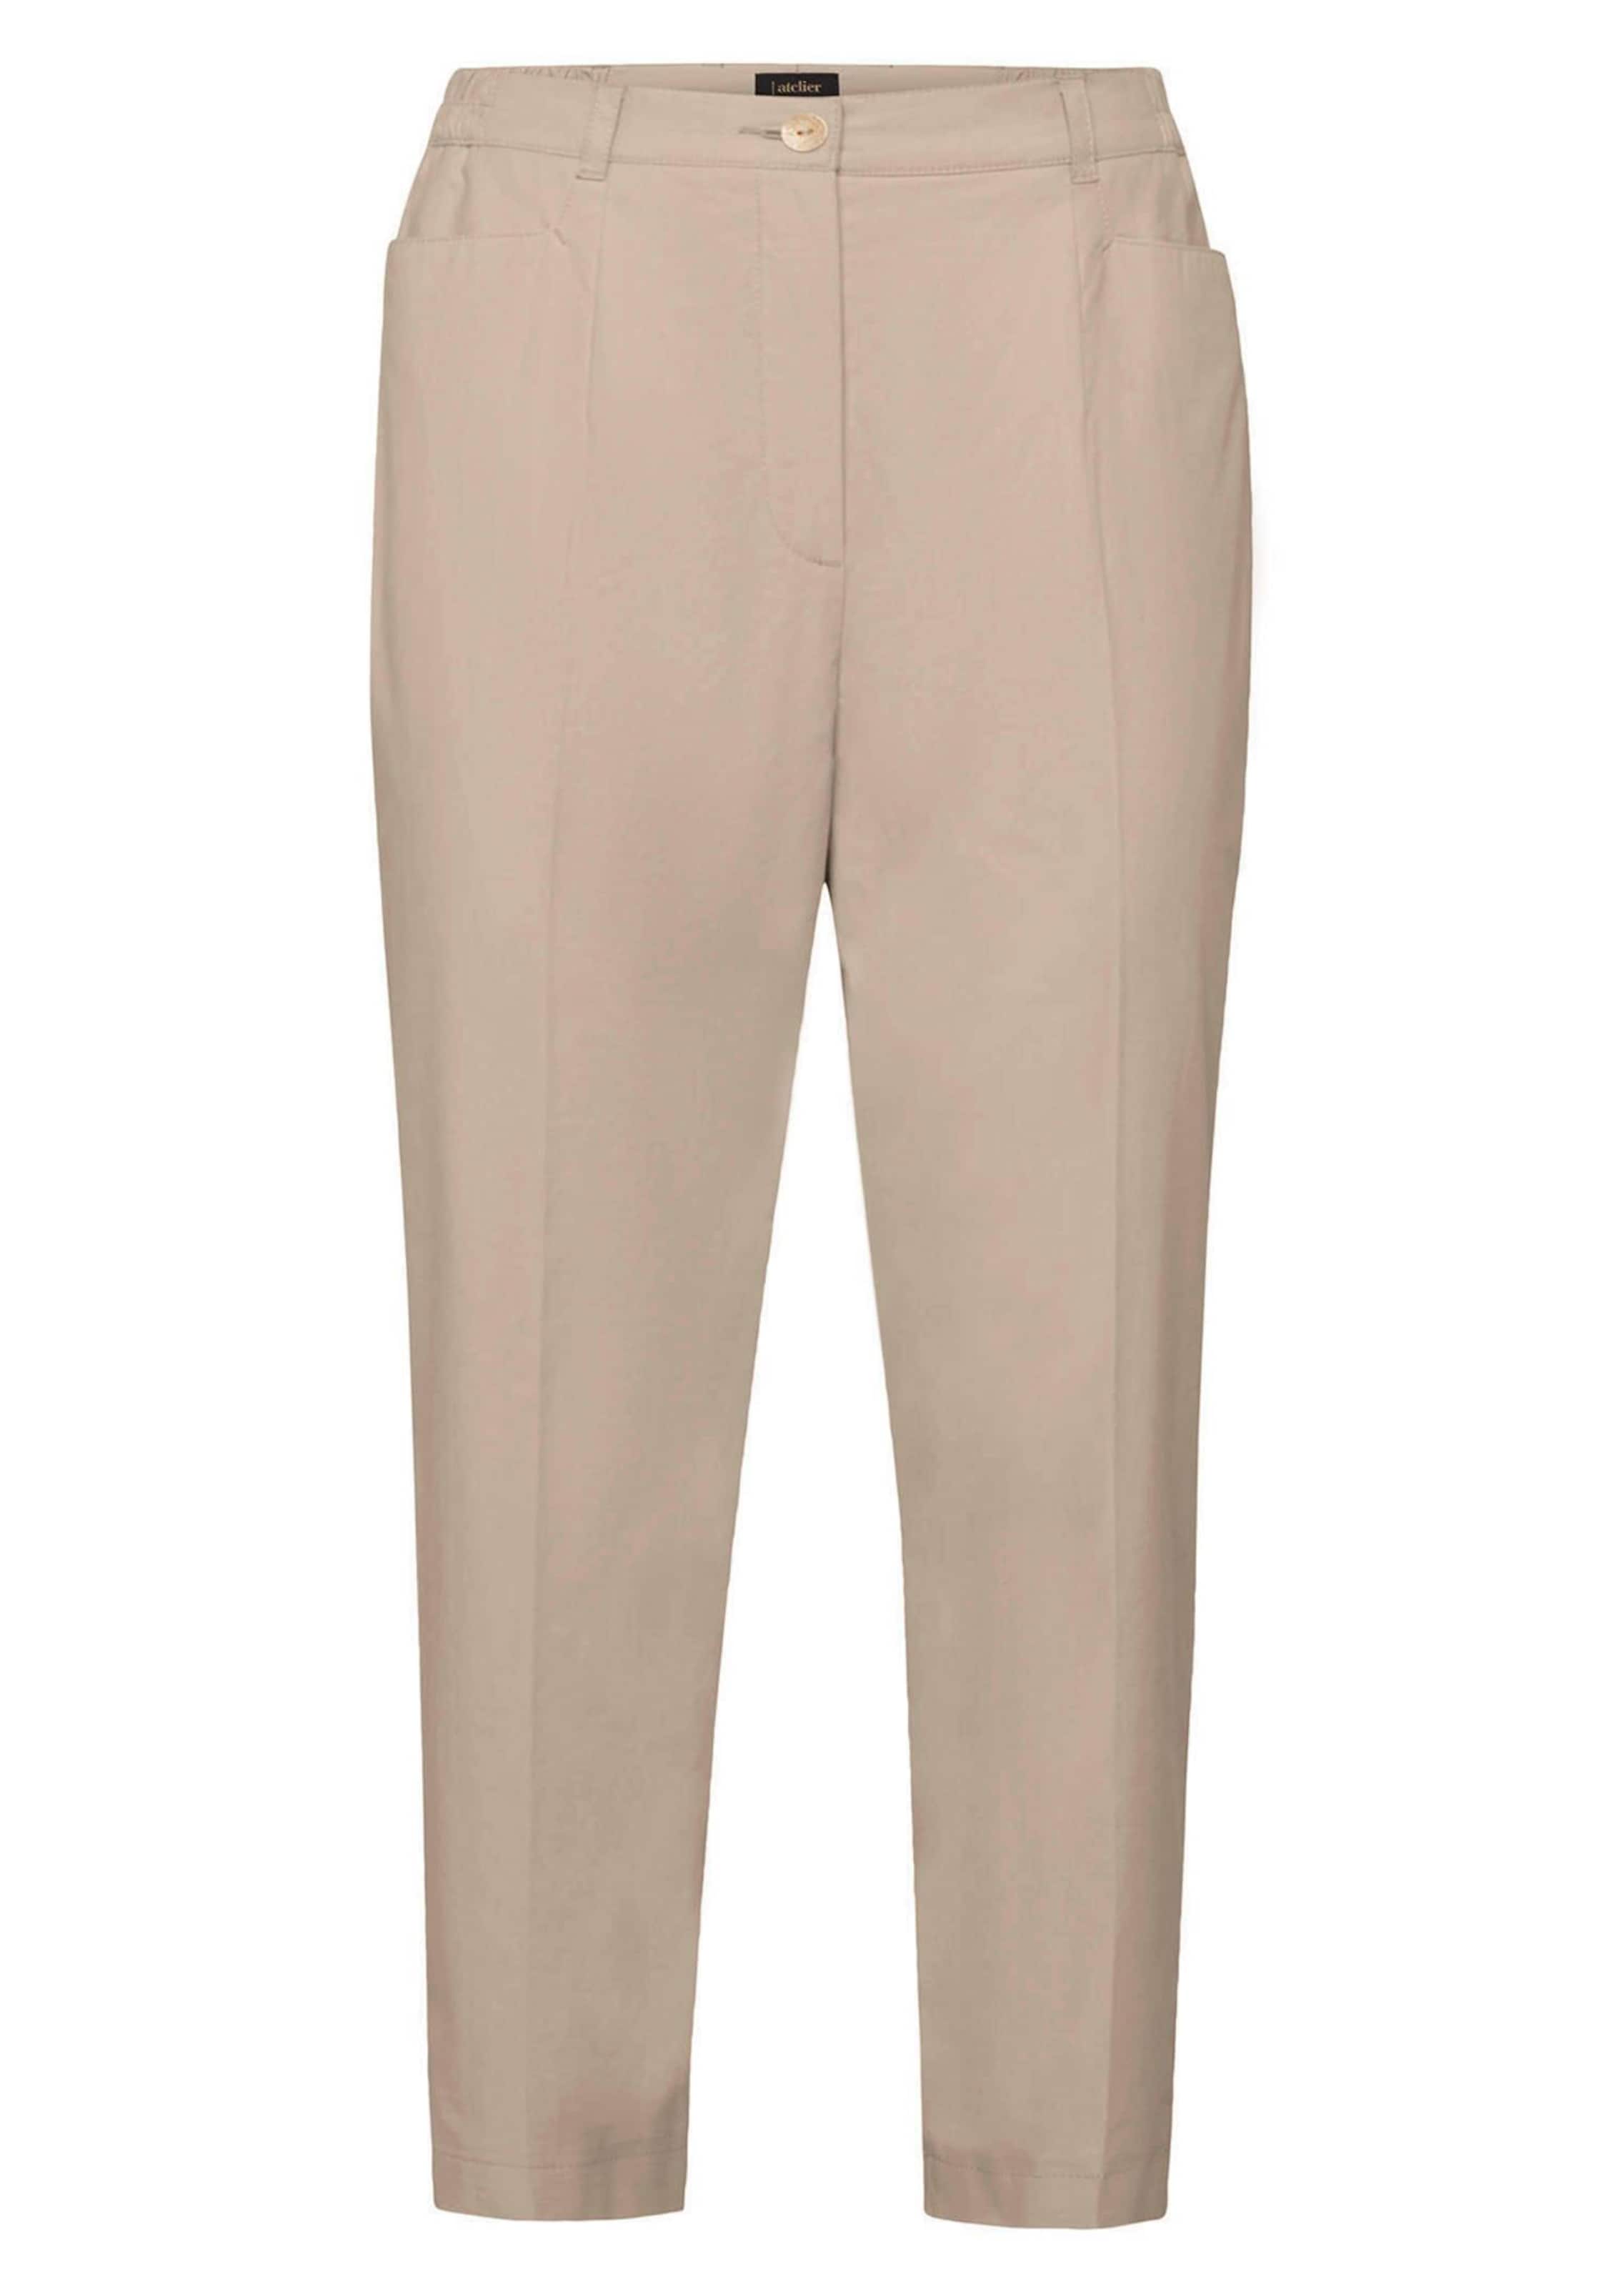 Pantalon 3/4 CARLA en coton Pima - beige - Gr. 46 de Goldner Fashion